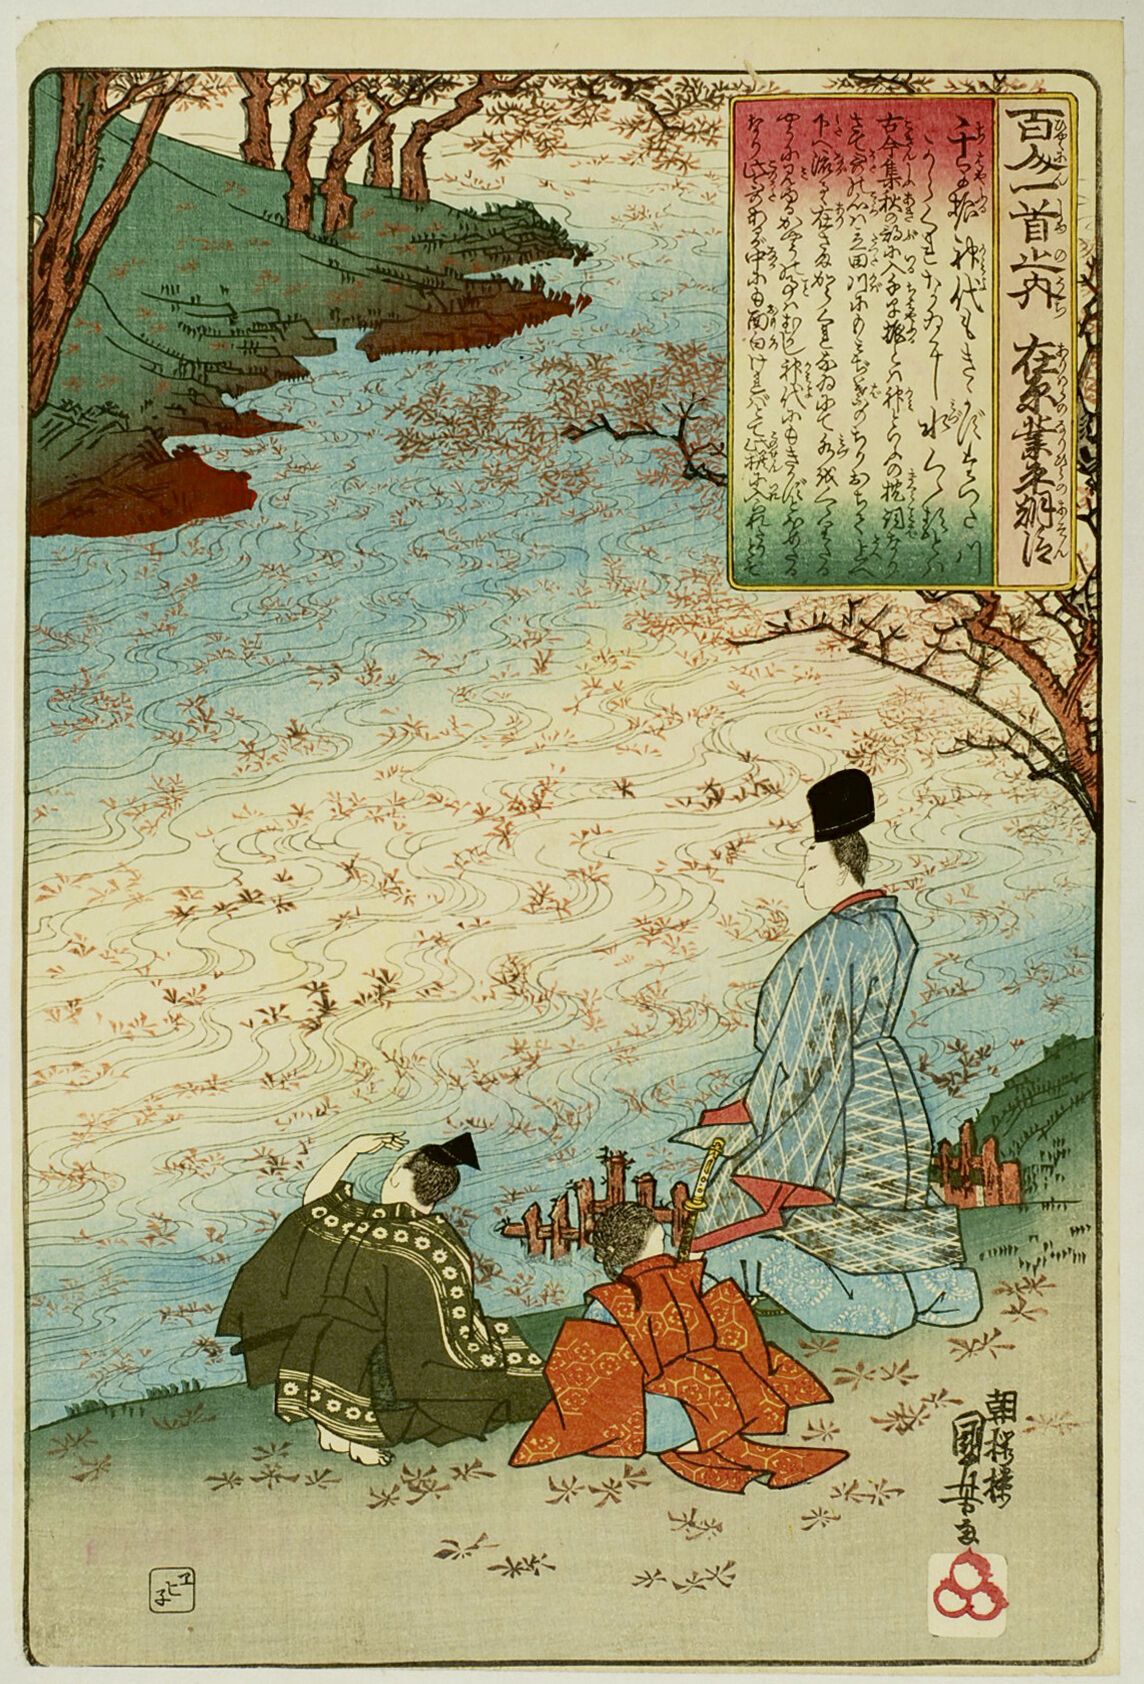 Null 宇都宫邦彦 (1797-1861)
百人一首》系列中的 "大班手绘"，板块为 "Ariwara no Narihira Ason"，诗人和他的侍者在辰&hellip;